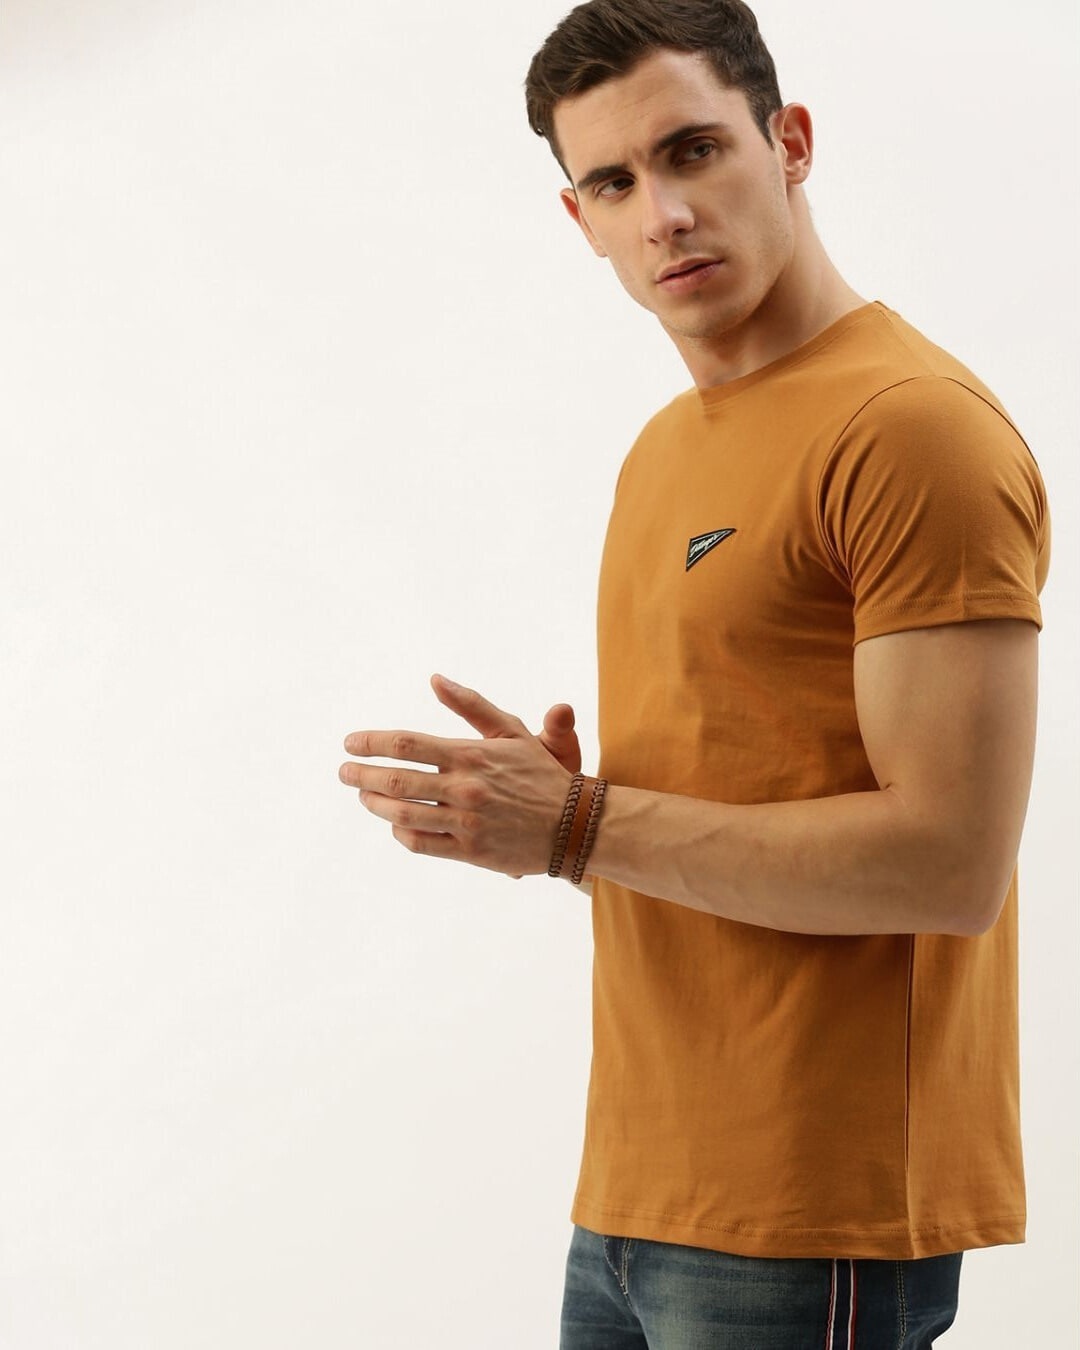 Shop Men's Brown Solid T-shirt